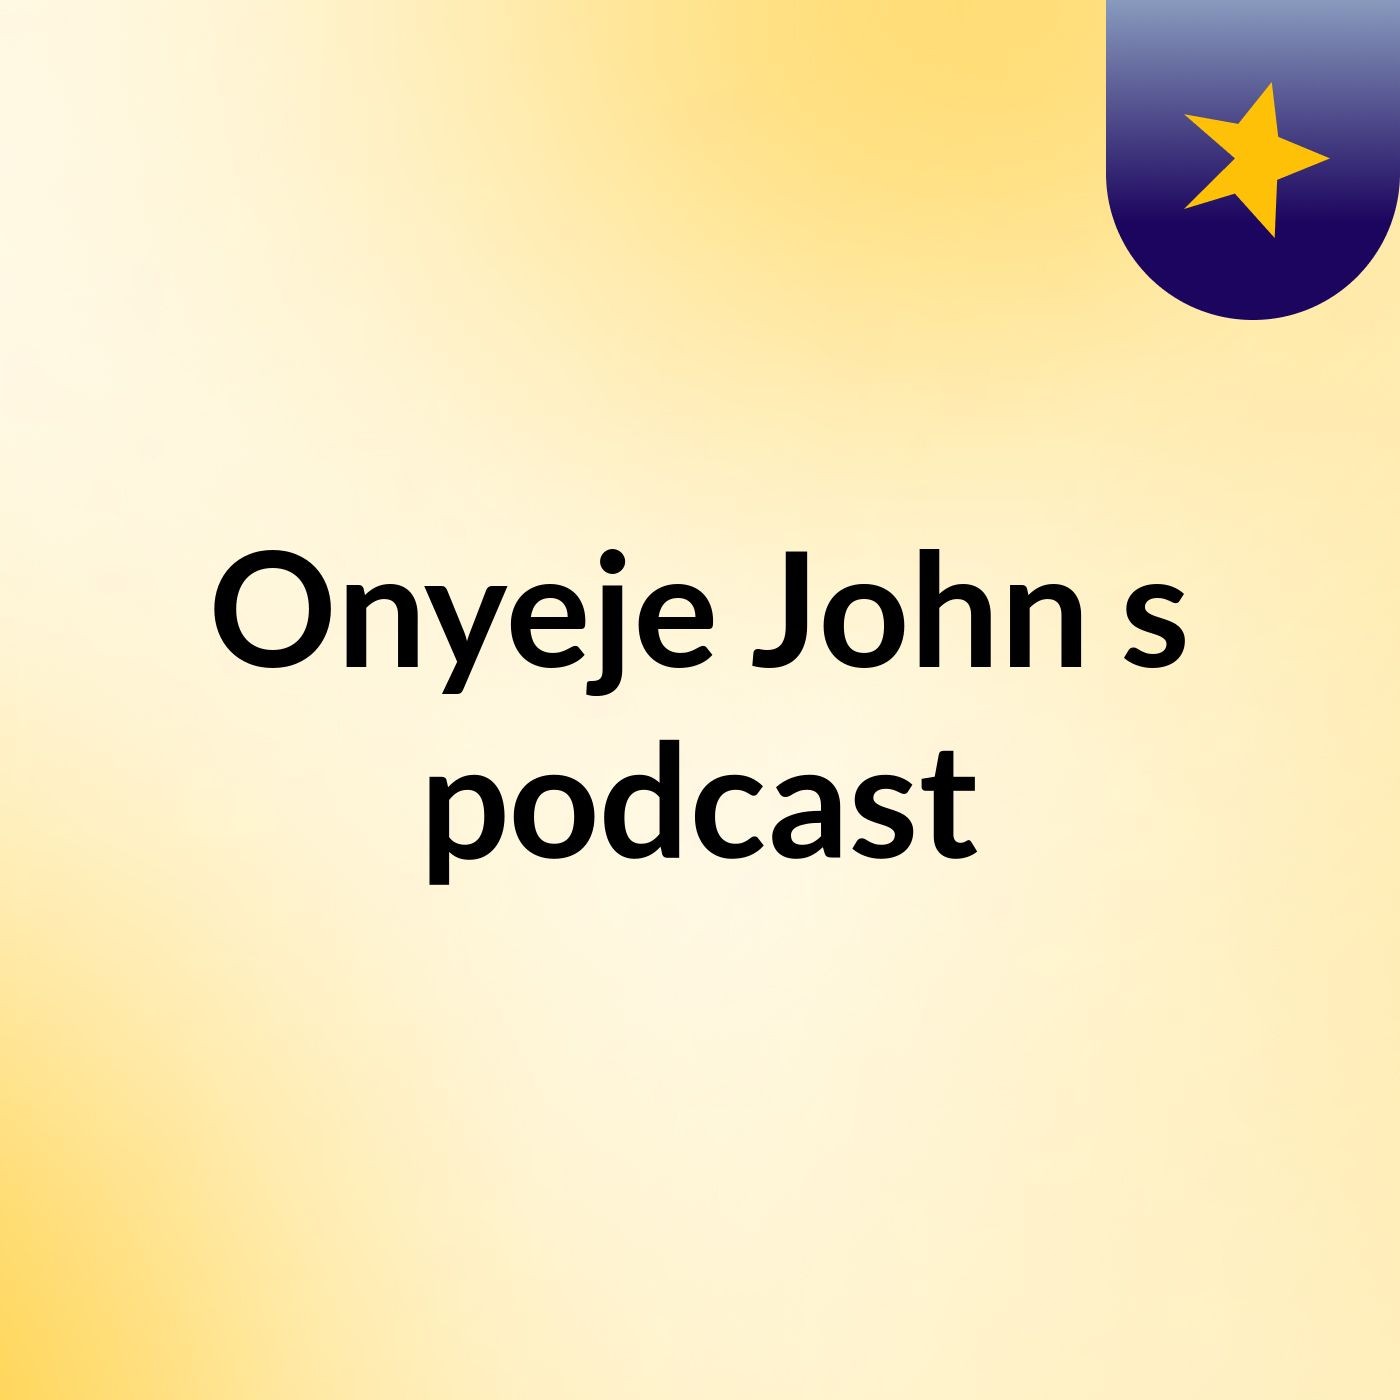 Onyeje John's podcast